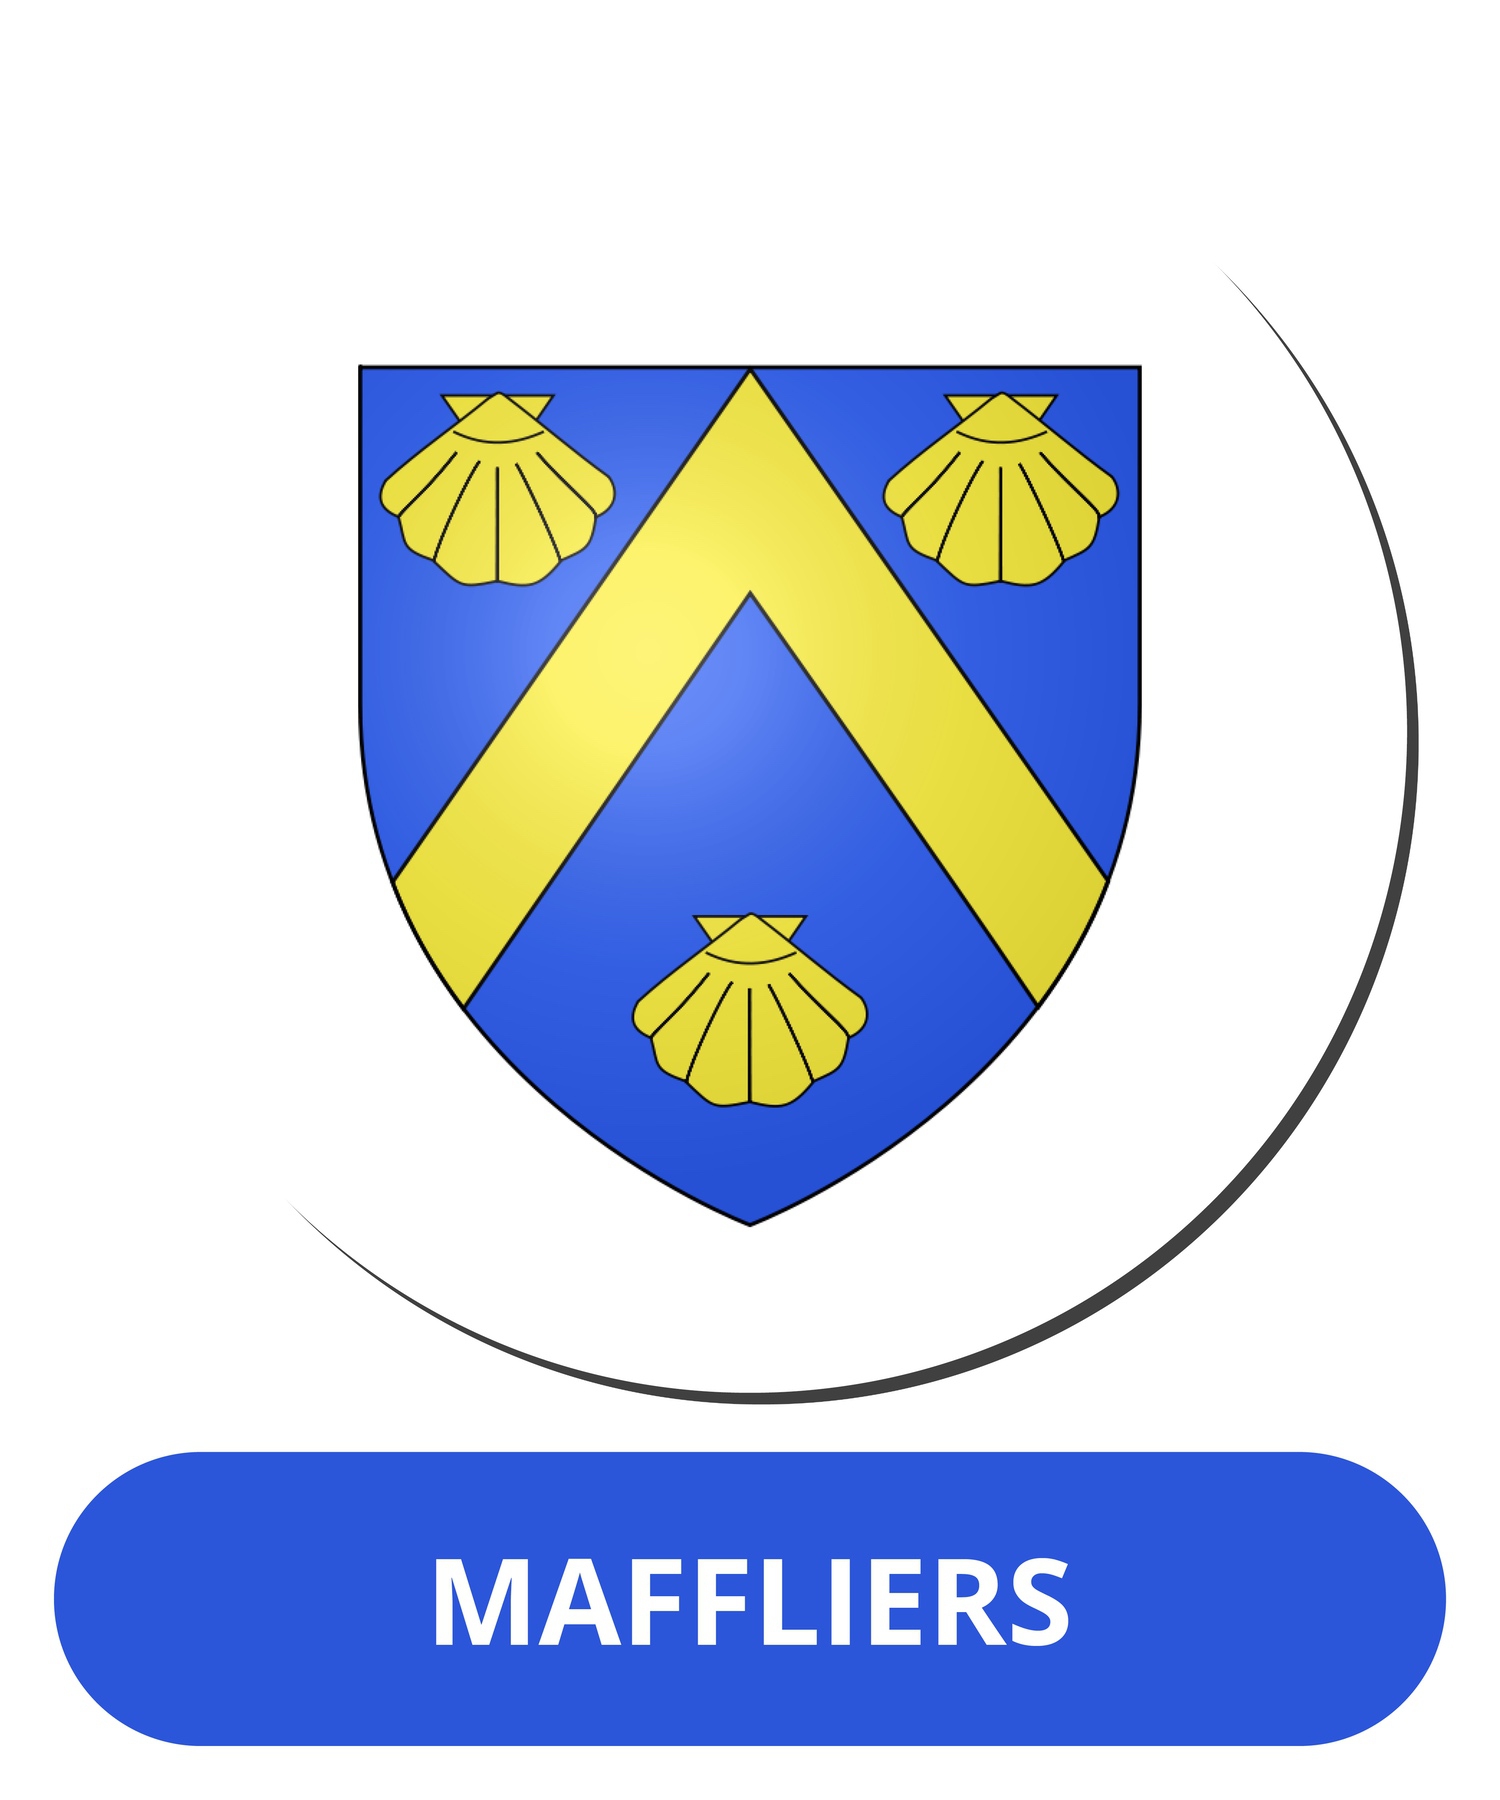 Maffliers